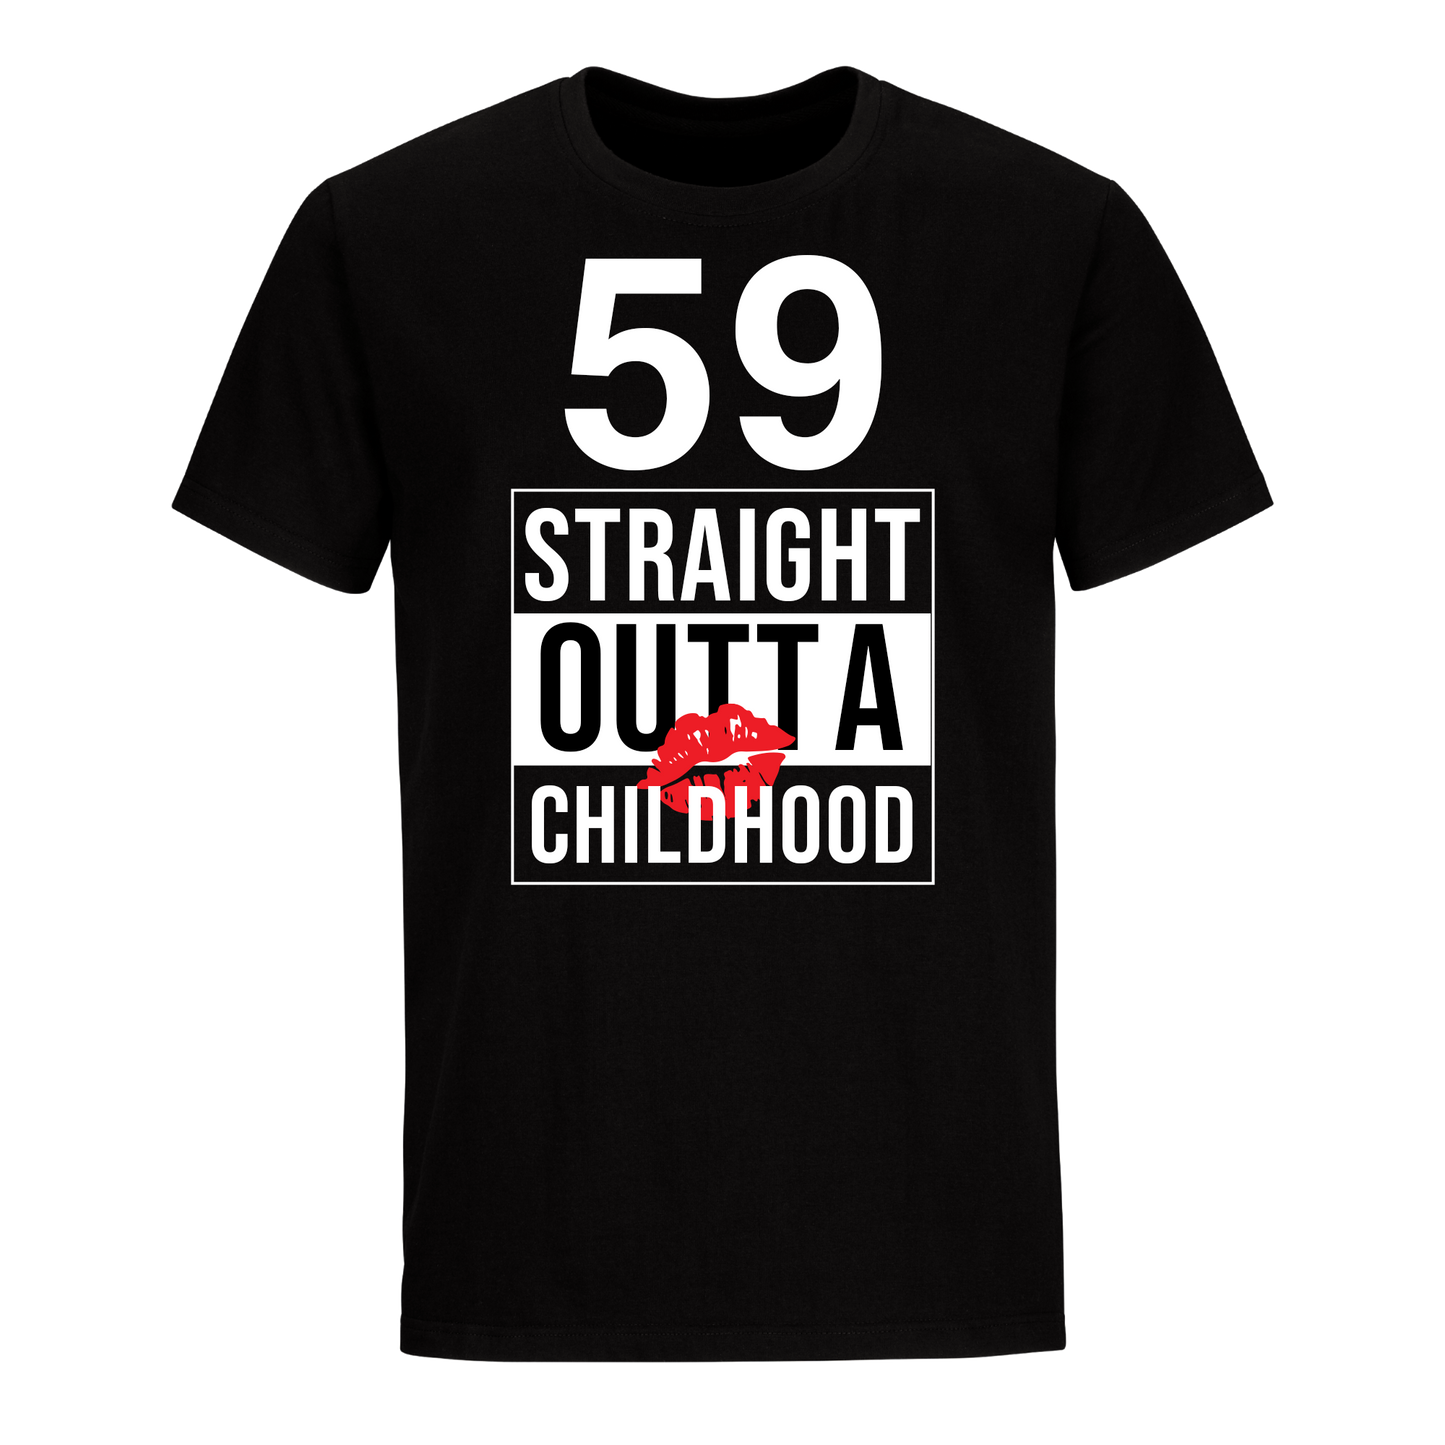 59 STRAIGHT OUTTA CHILDHOOD UNISEX SHIRT